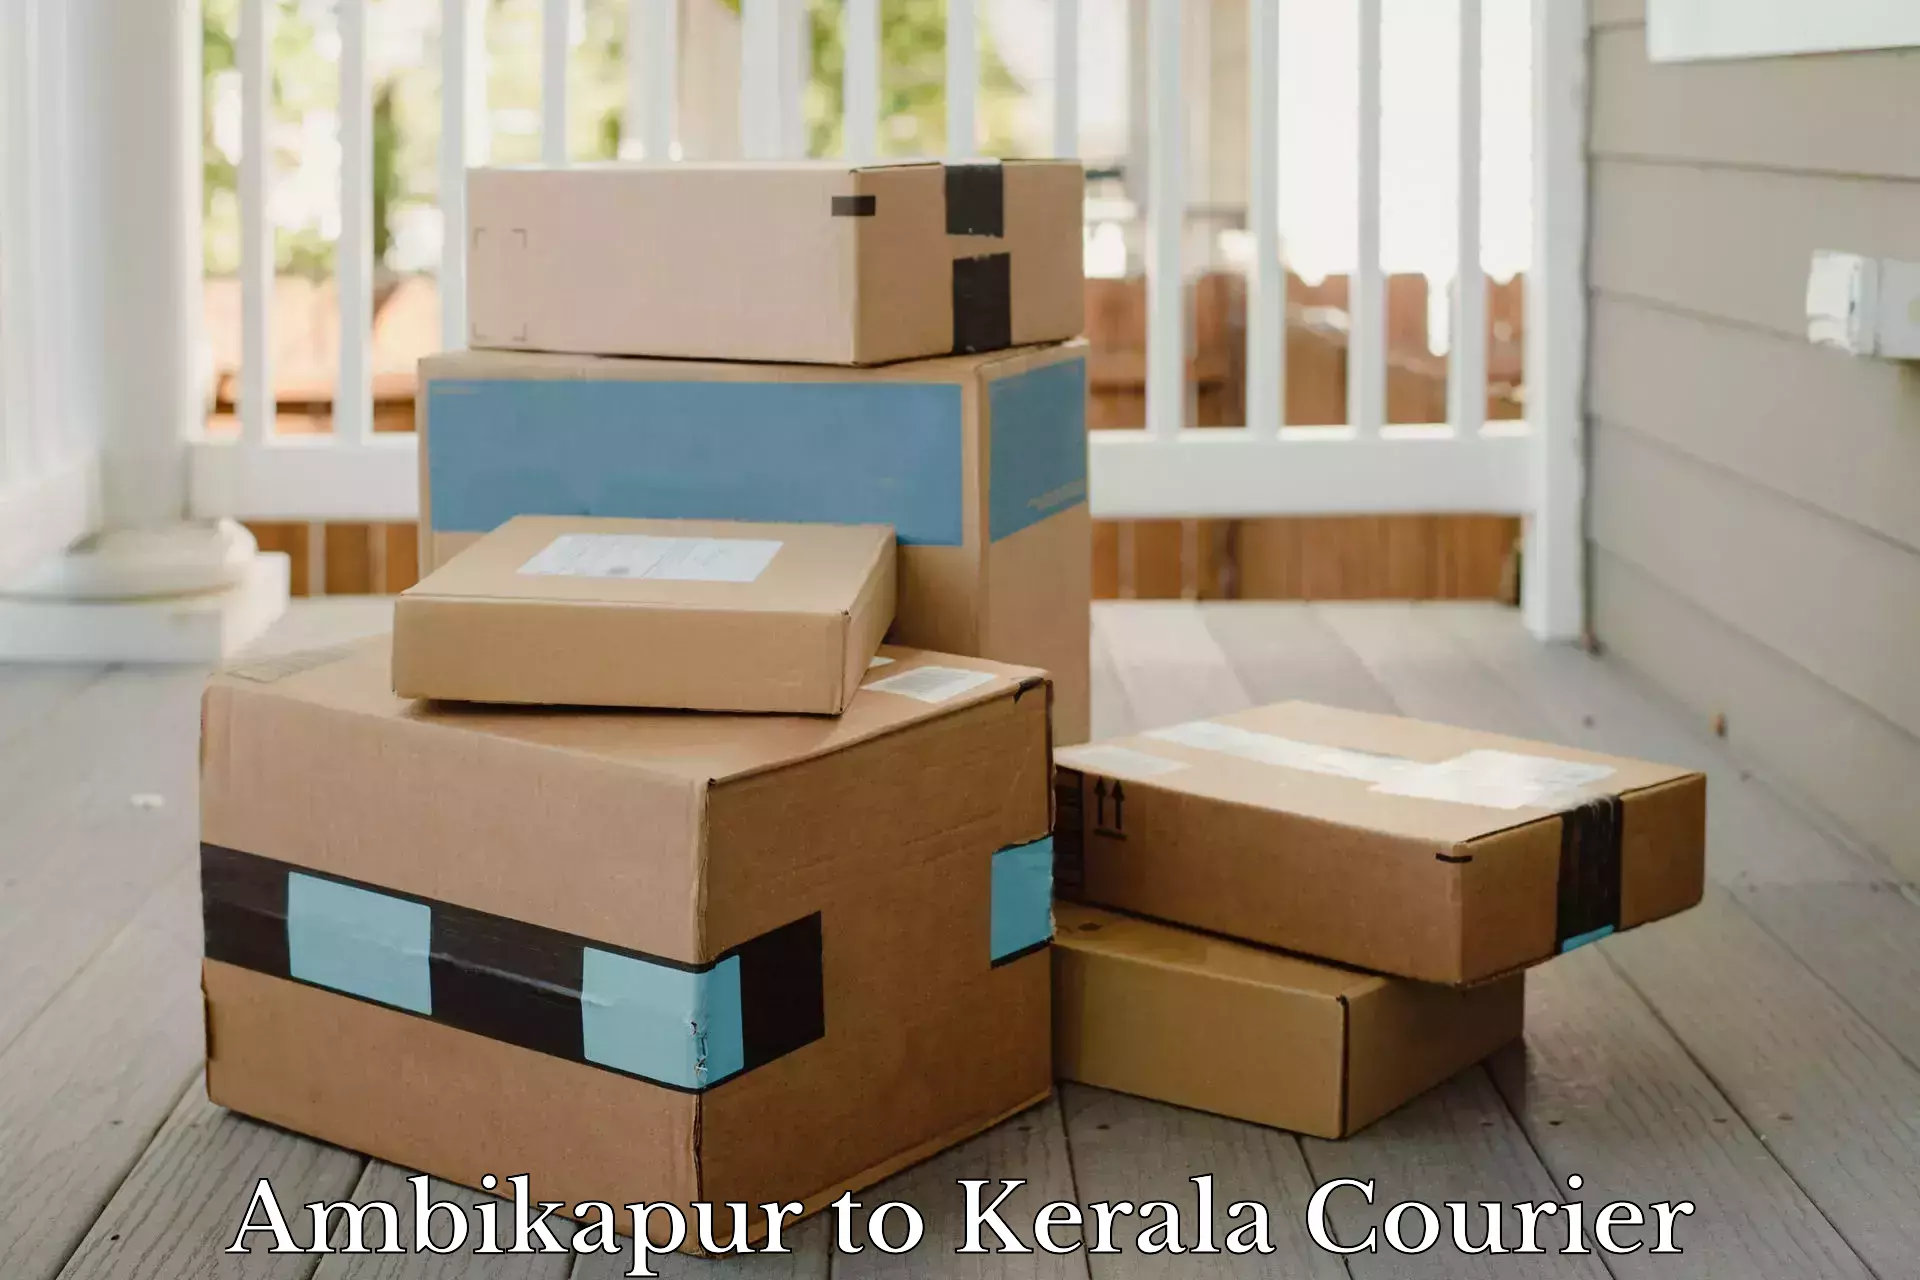 Speedy delivery service Ambikapur to Kattappana